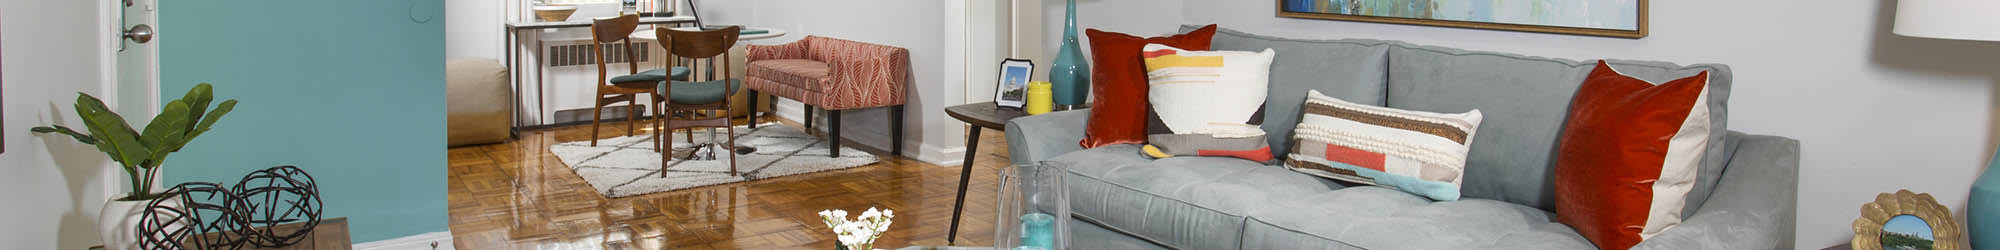 Apartments in Mount Rainier, MD offering Studio, 1, 2 & 3 bedroom apartments